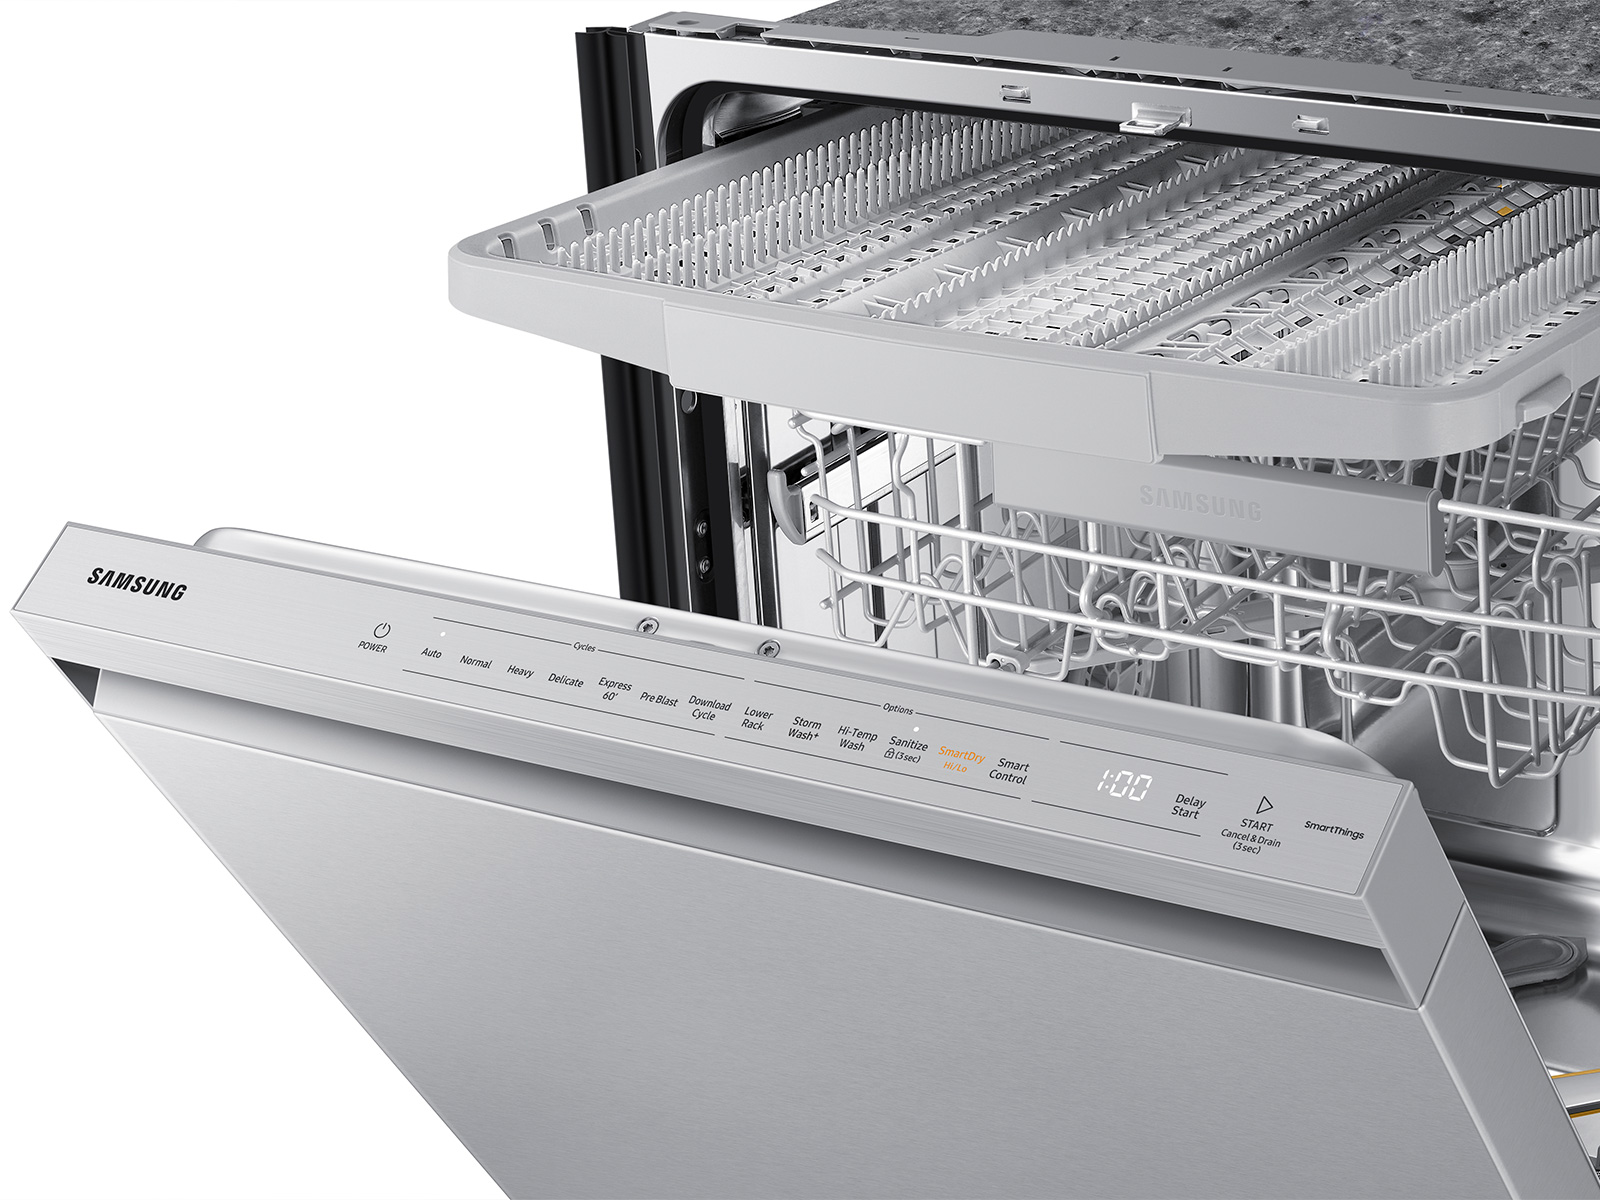 Samsung Smart 42dBA Dishwasher with StormWash and Smart Dry